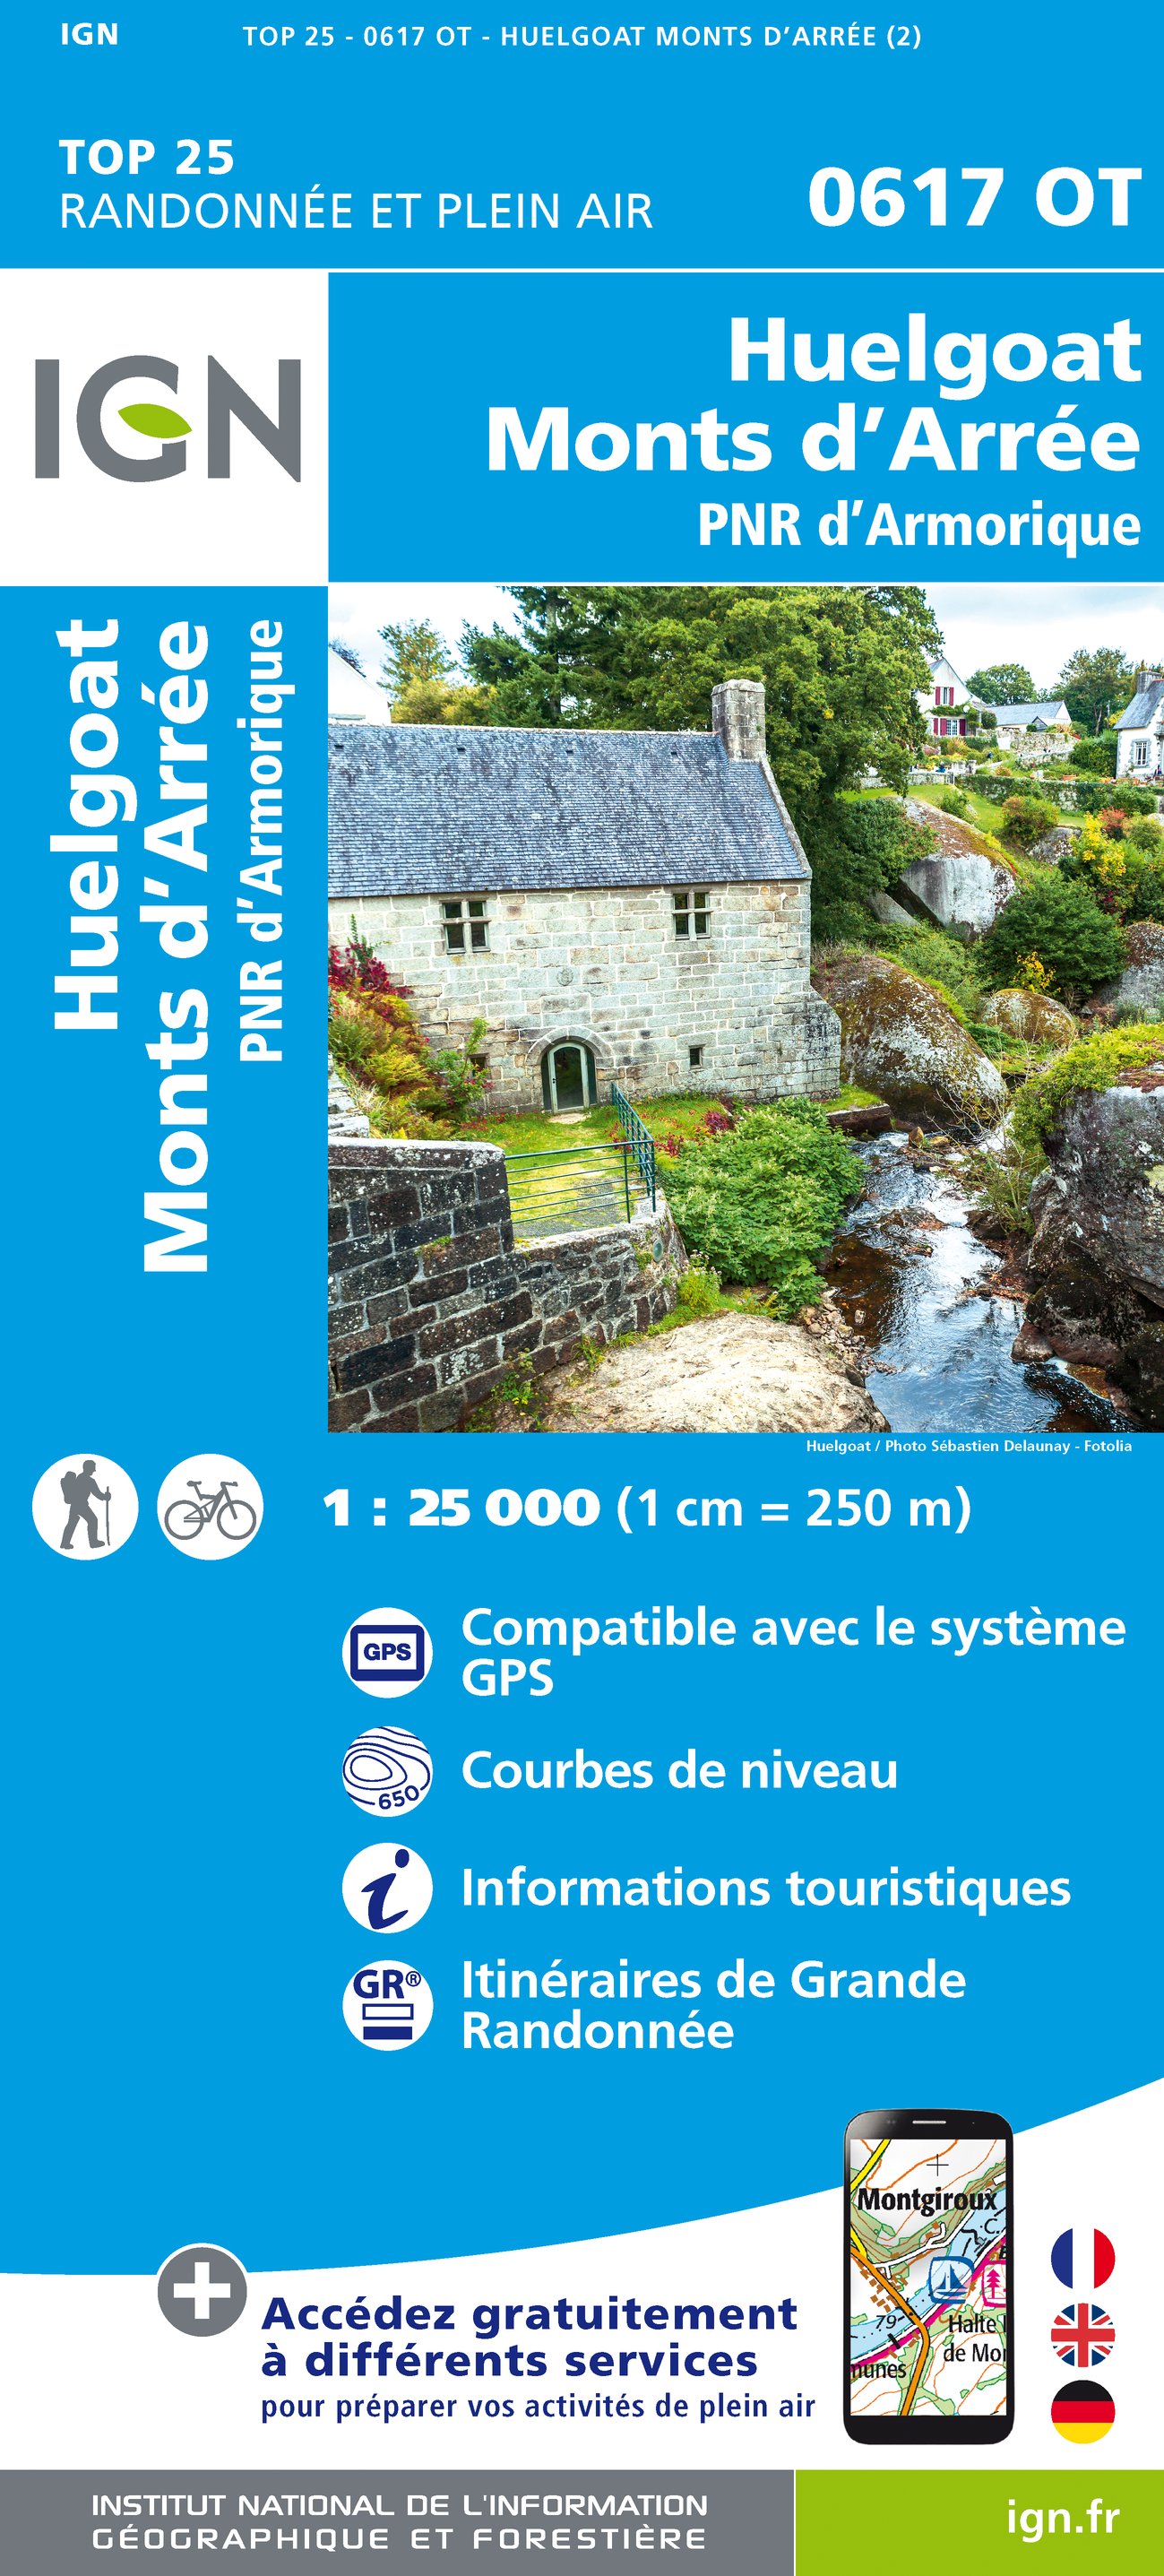 Online bestellen: Wandelkaart - Topografische kaart 0617OT Huelgoat, Monts d´Arrée, PNR d´Armorique, Plonevez - du - Faou | IGN - Institut Géographique National